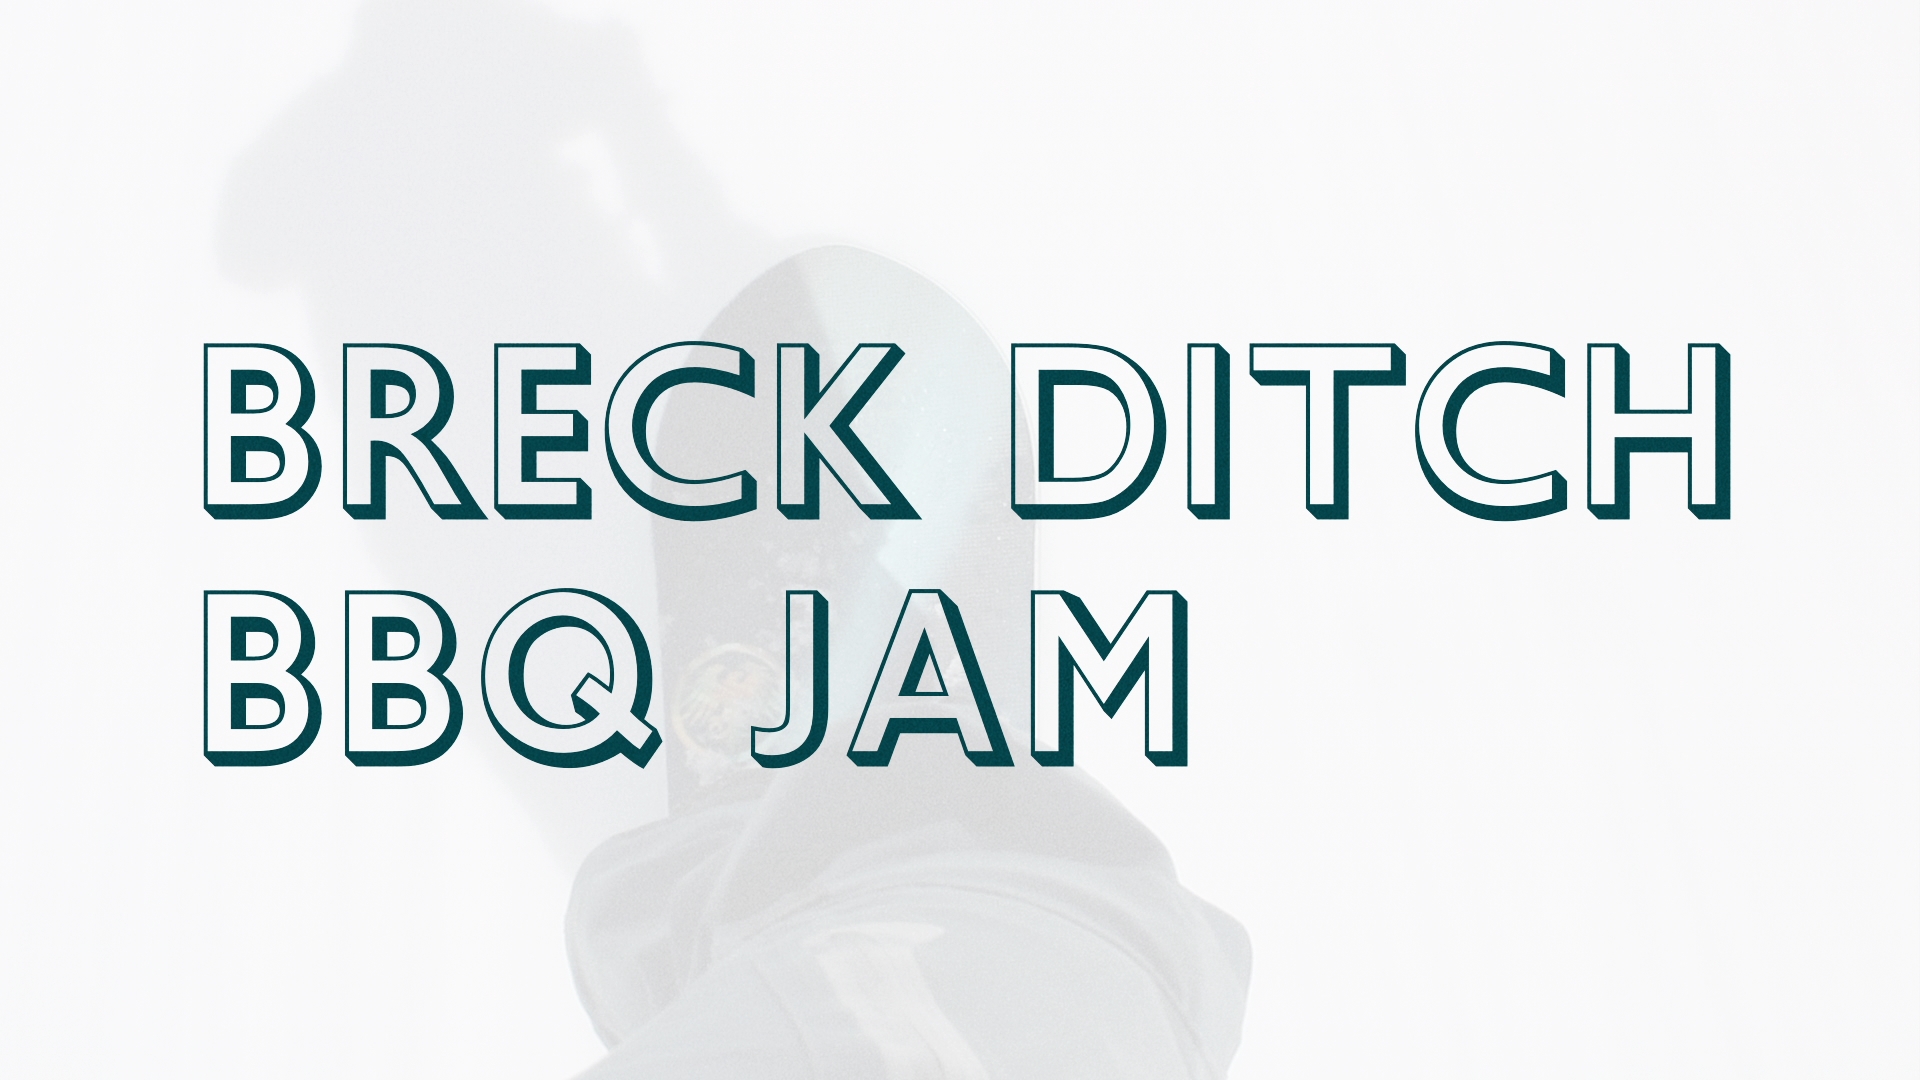 Breck Ditch BBQ Jam